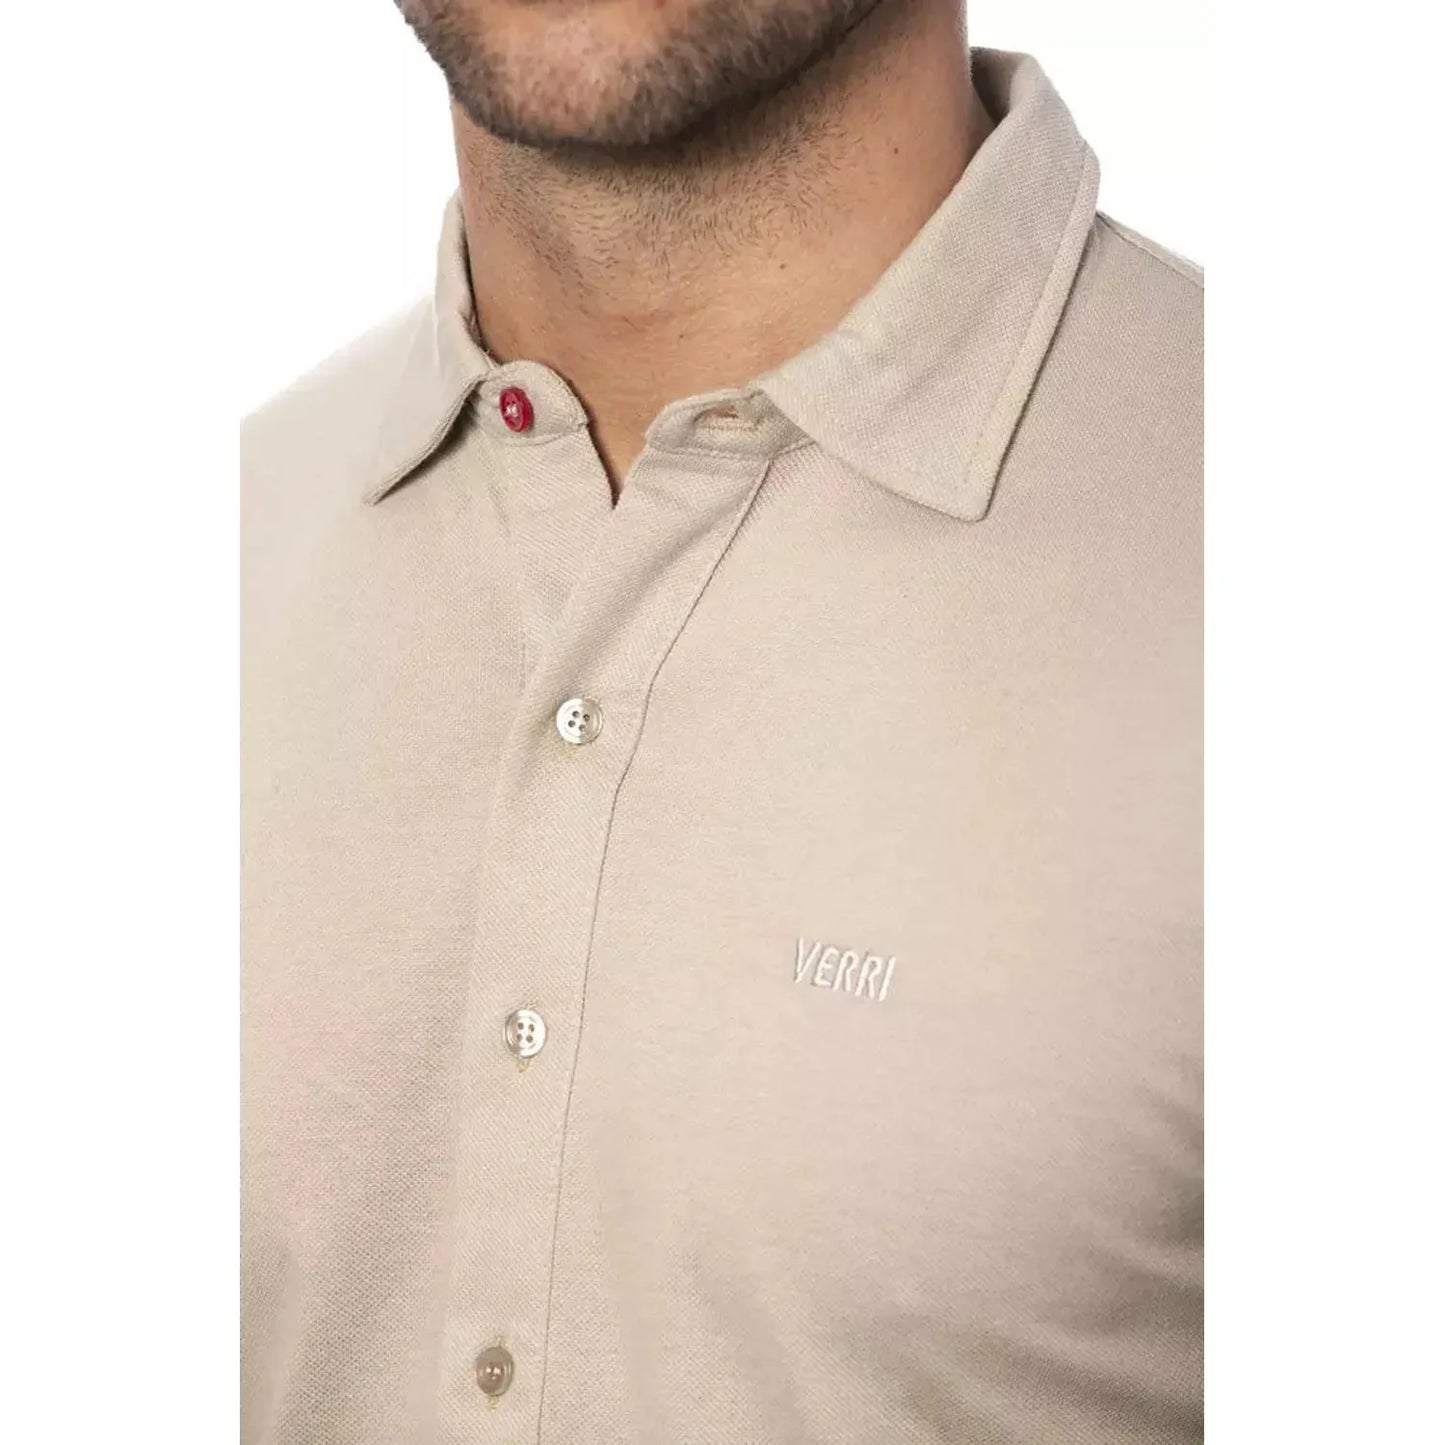 Verri Elegant Beige Regular Fit Cotton Shirt v-shirt stock_product_image_18291_455462870-16-08add1fa-872.webp